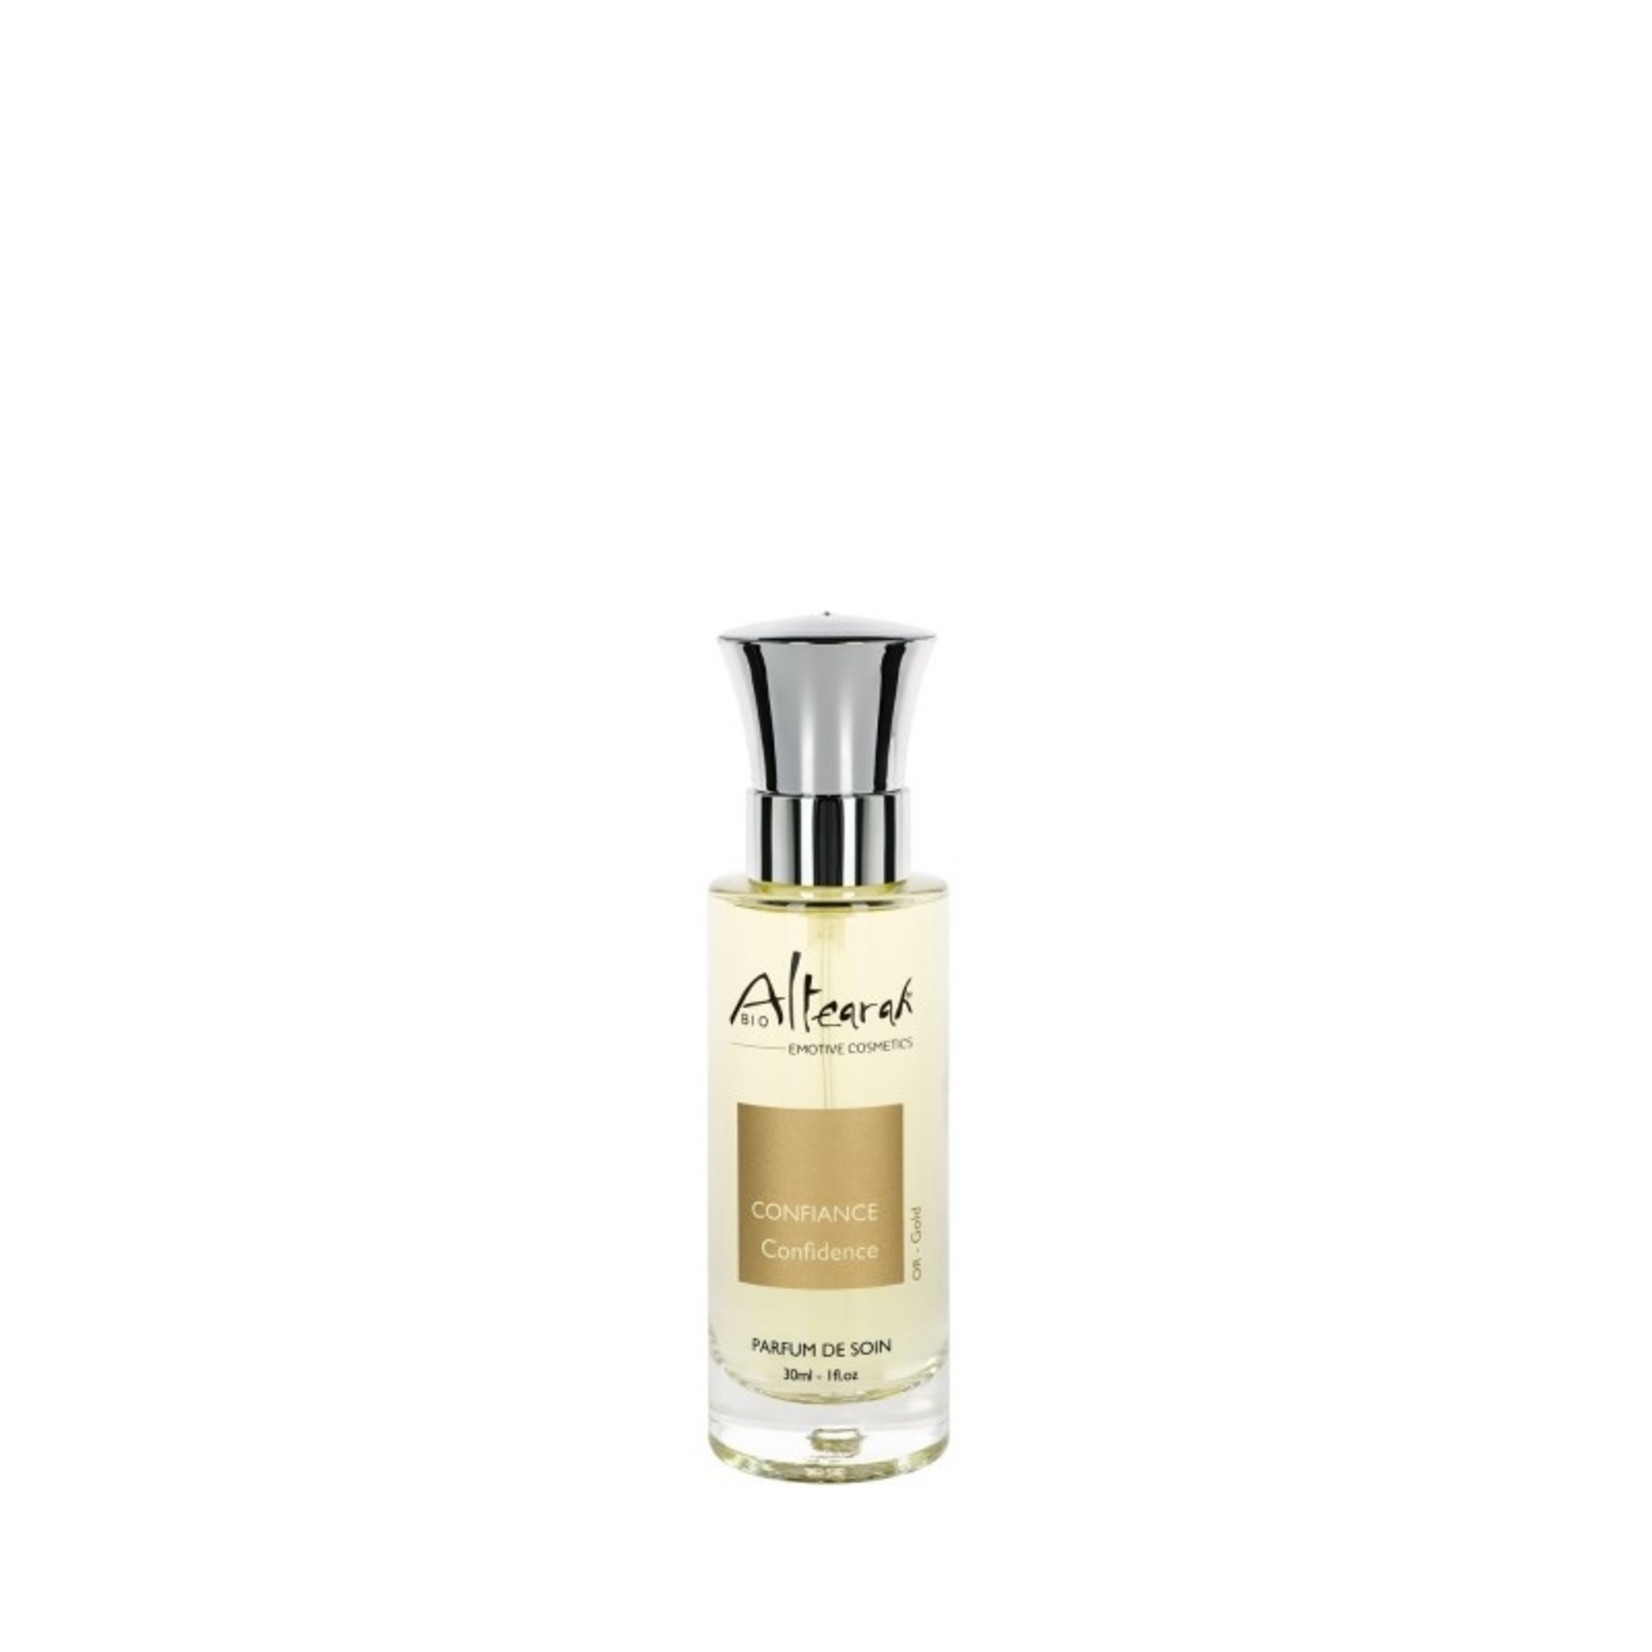 Altearah Care parfume - (Gold) Confidence